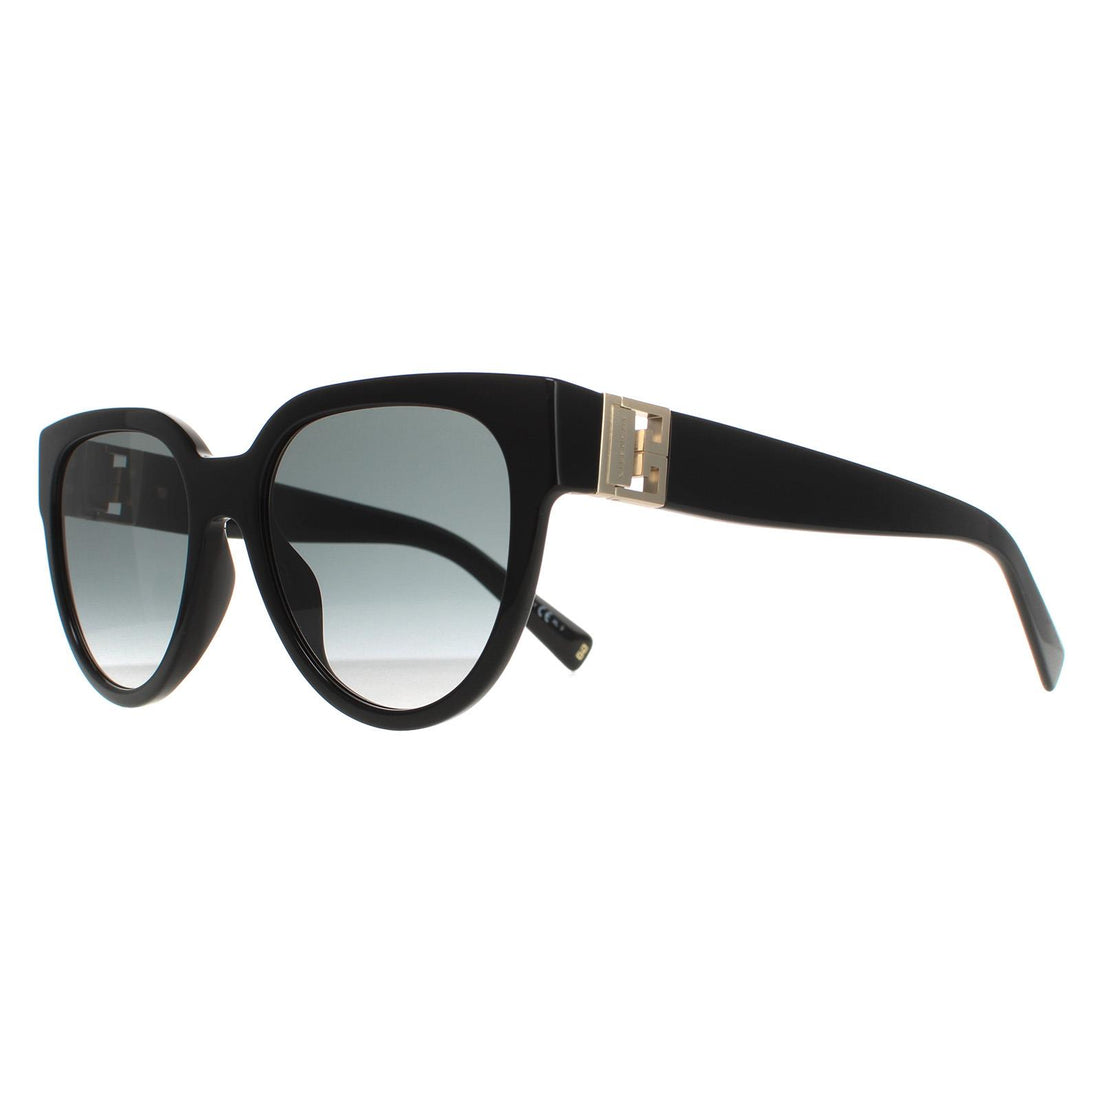 Givenchy Sunglasses GV 7155/G/S 807 9O Black Dark Grey Gradient